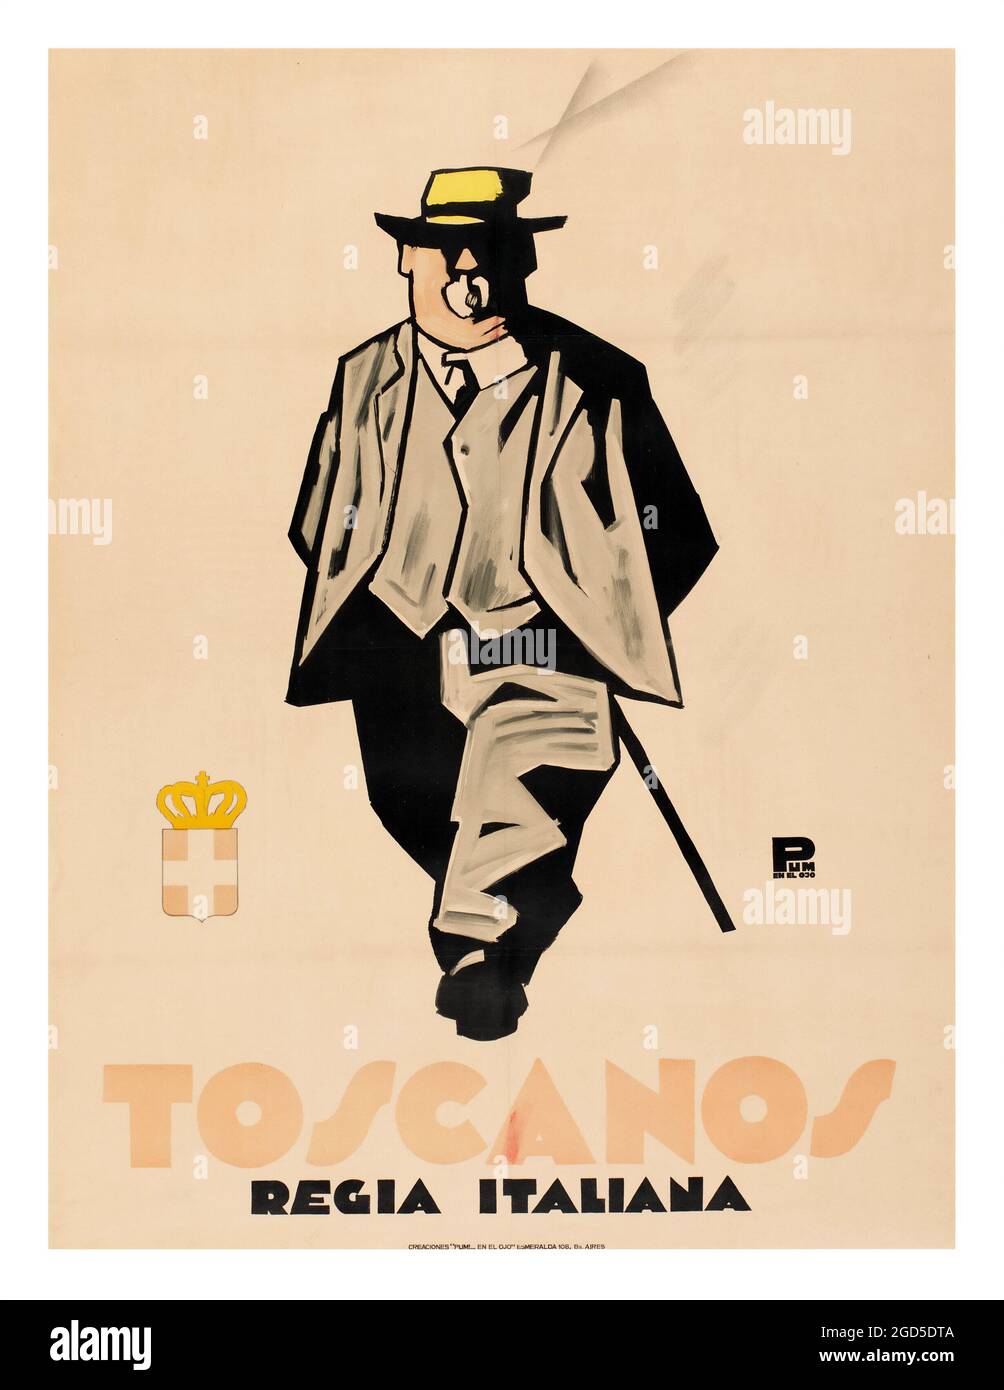 Vintage poster art - retro – Leonetto Cappiello (French, 1875-1942). Toscanos Regia Italiana. Cigars. Old man smoking a cigar. Stock Photo